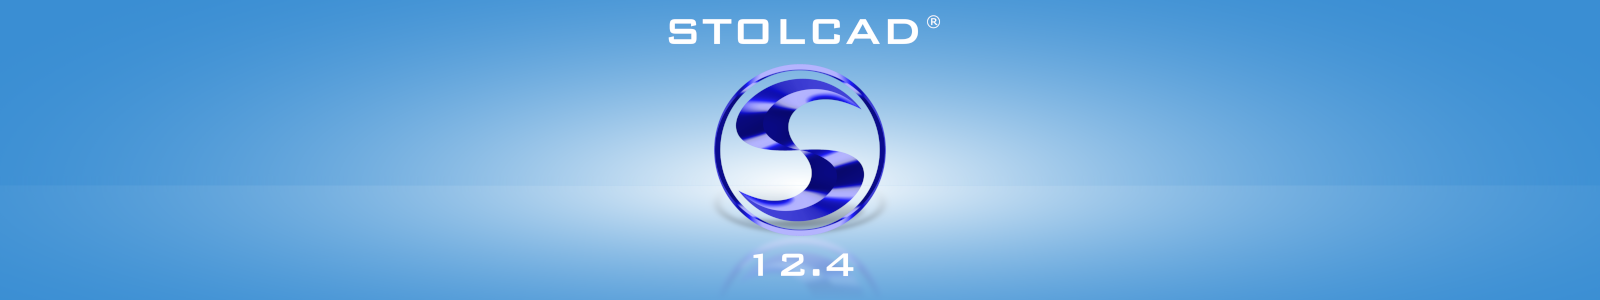 Stolcad 12.4 за производители на прозорци и врати